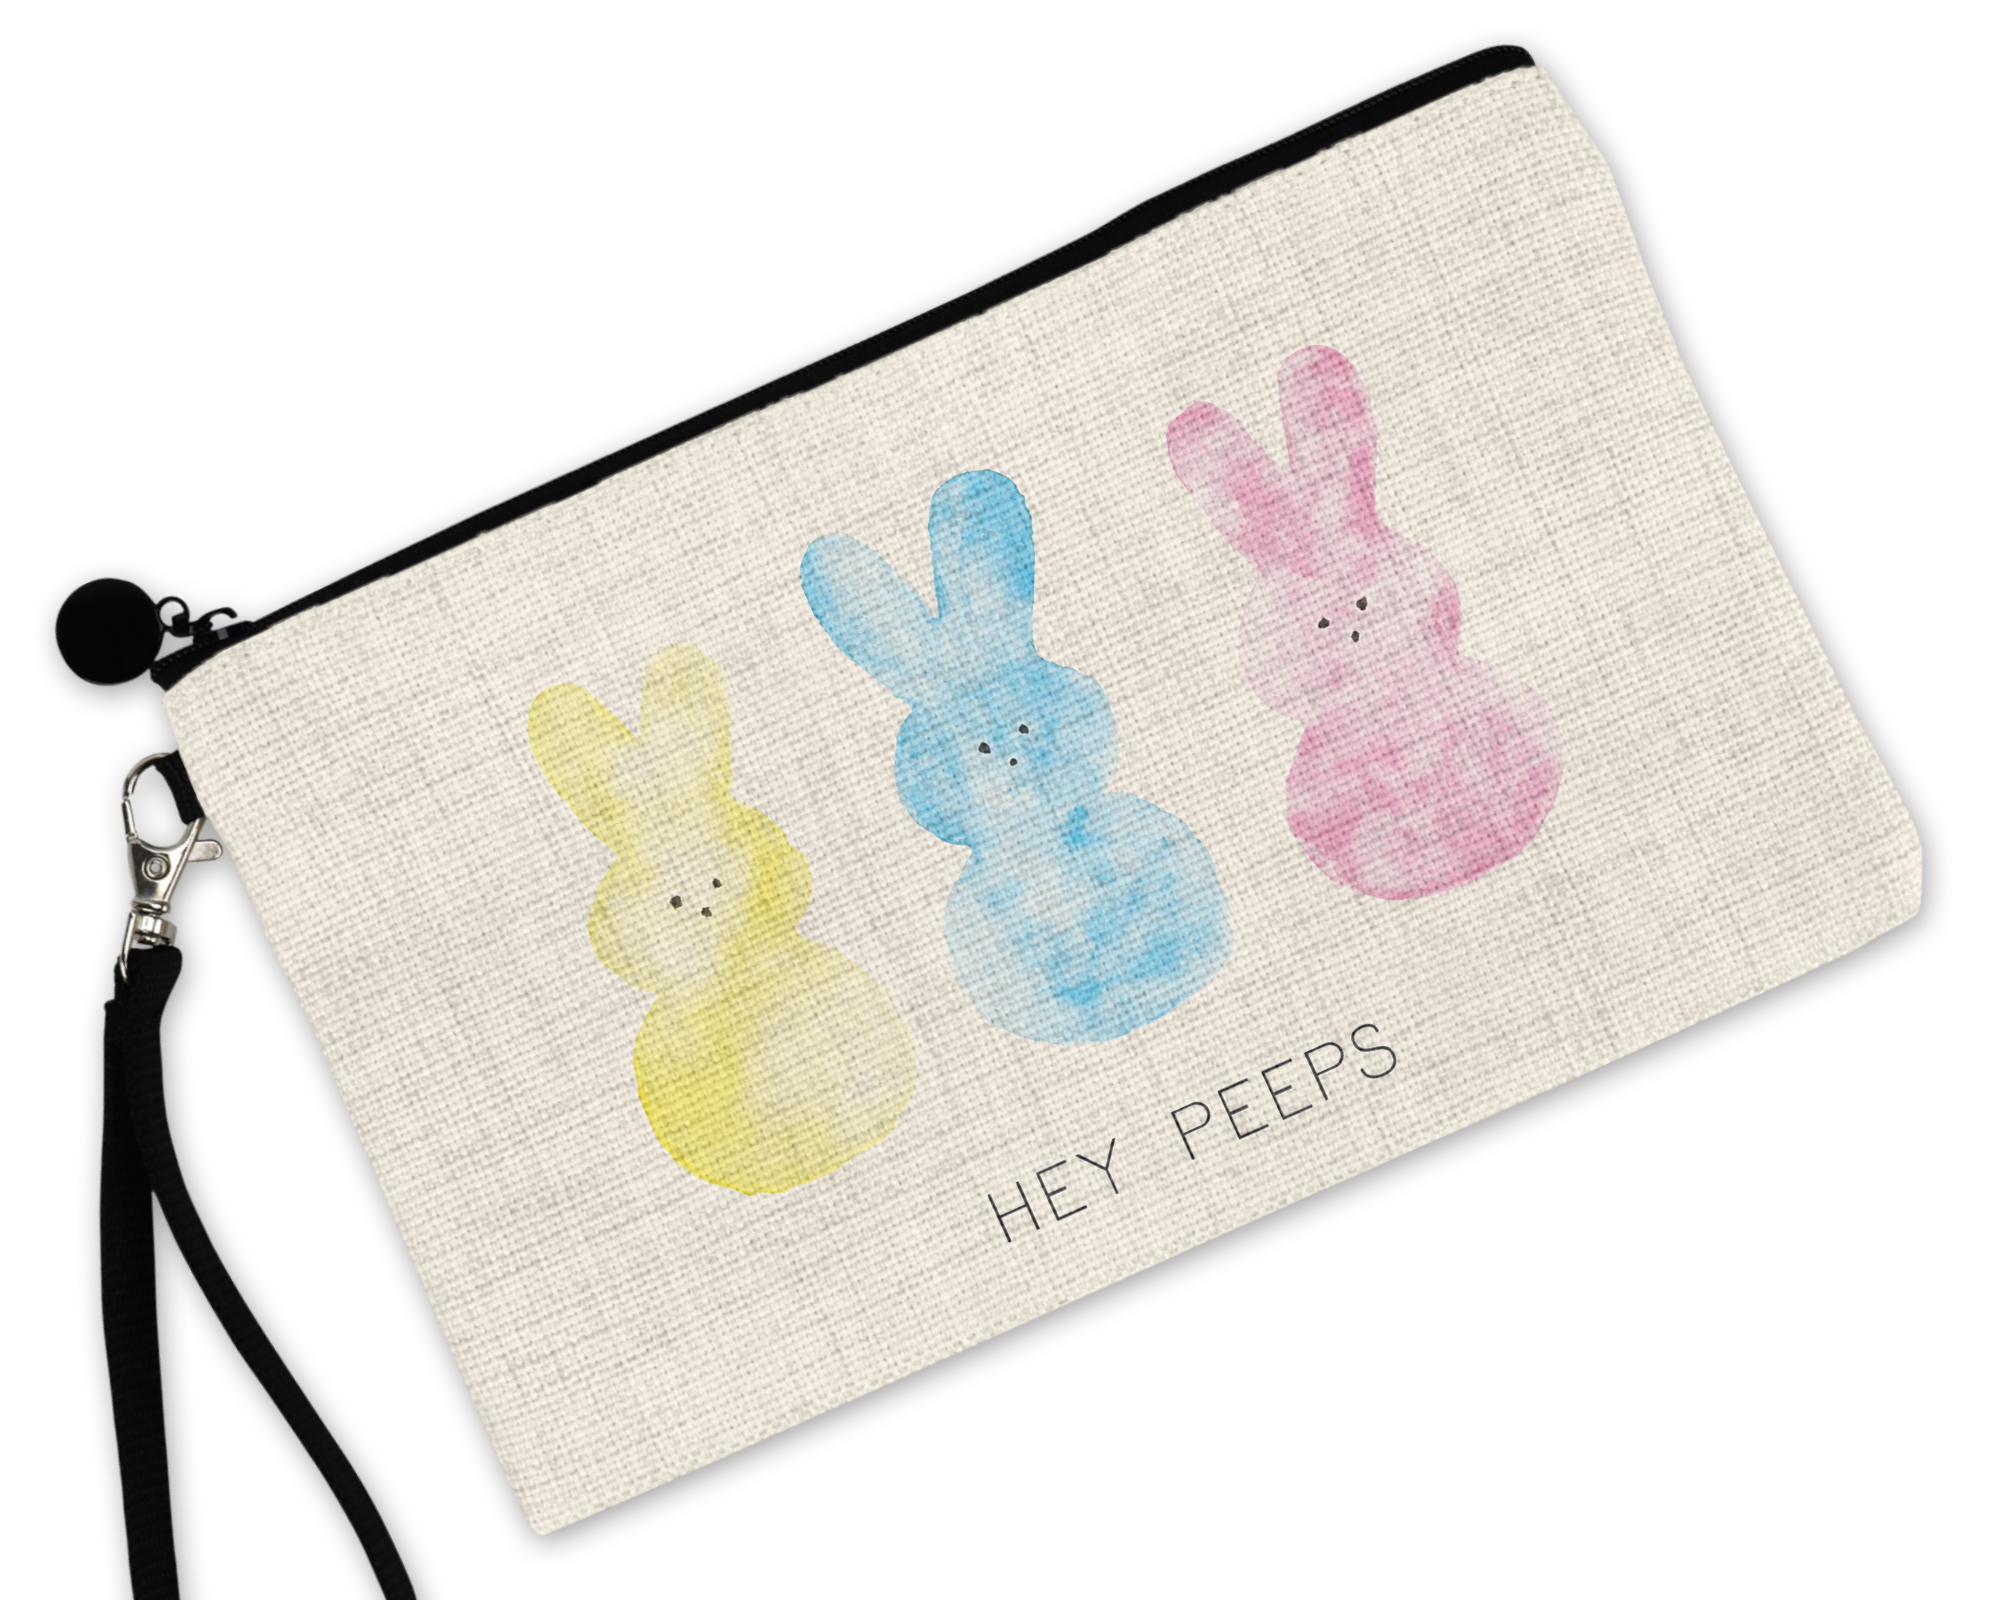 "Hey Peeps" - Linen Hand Bag